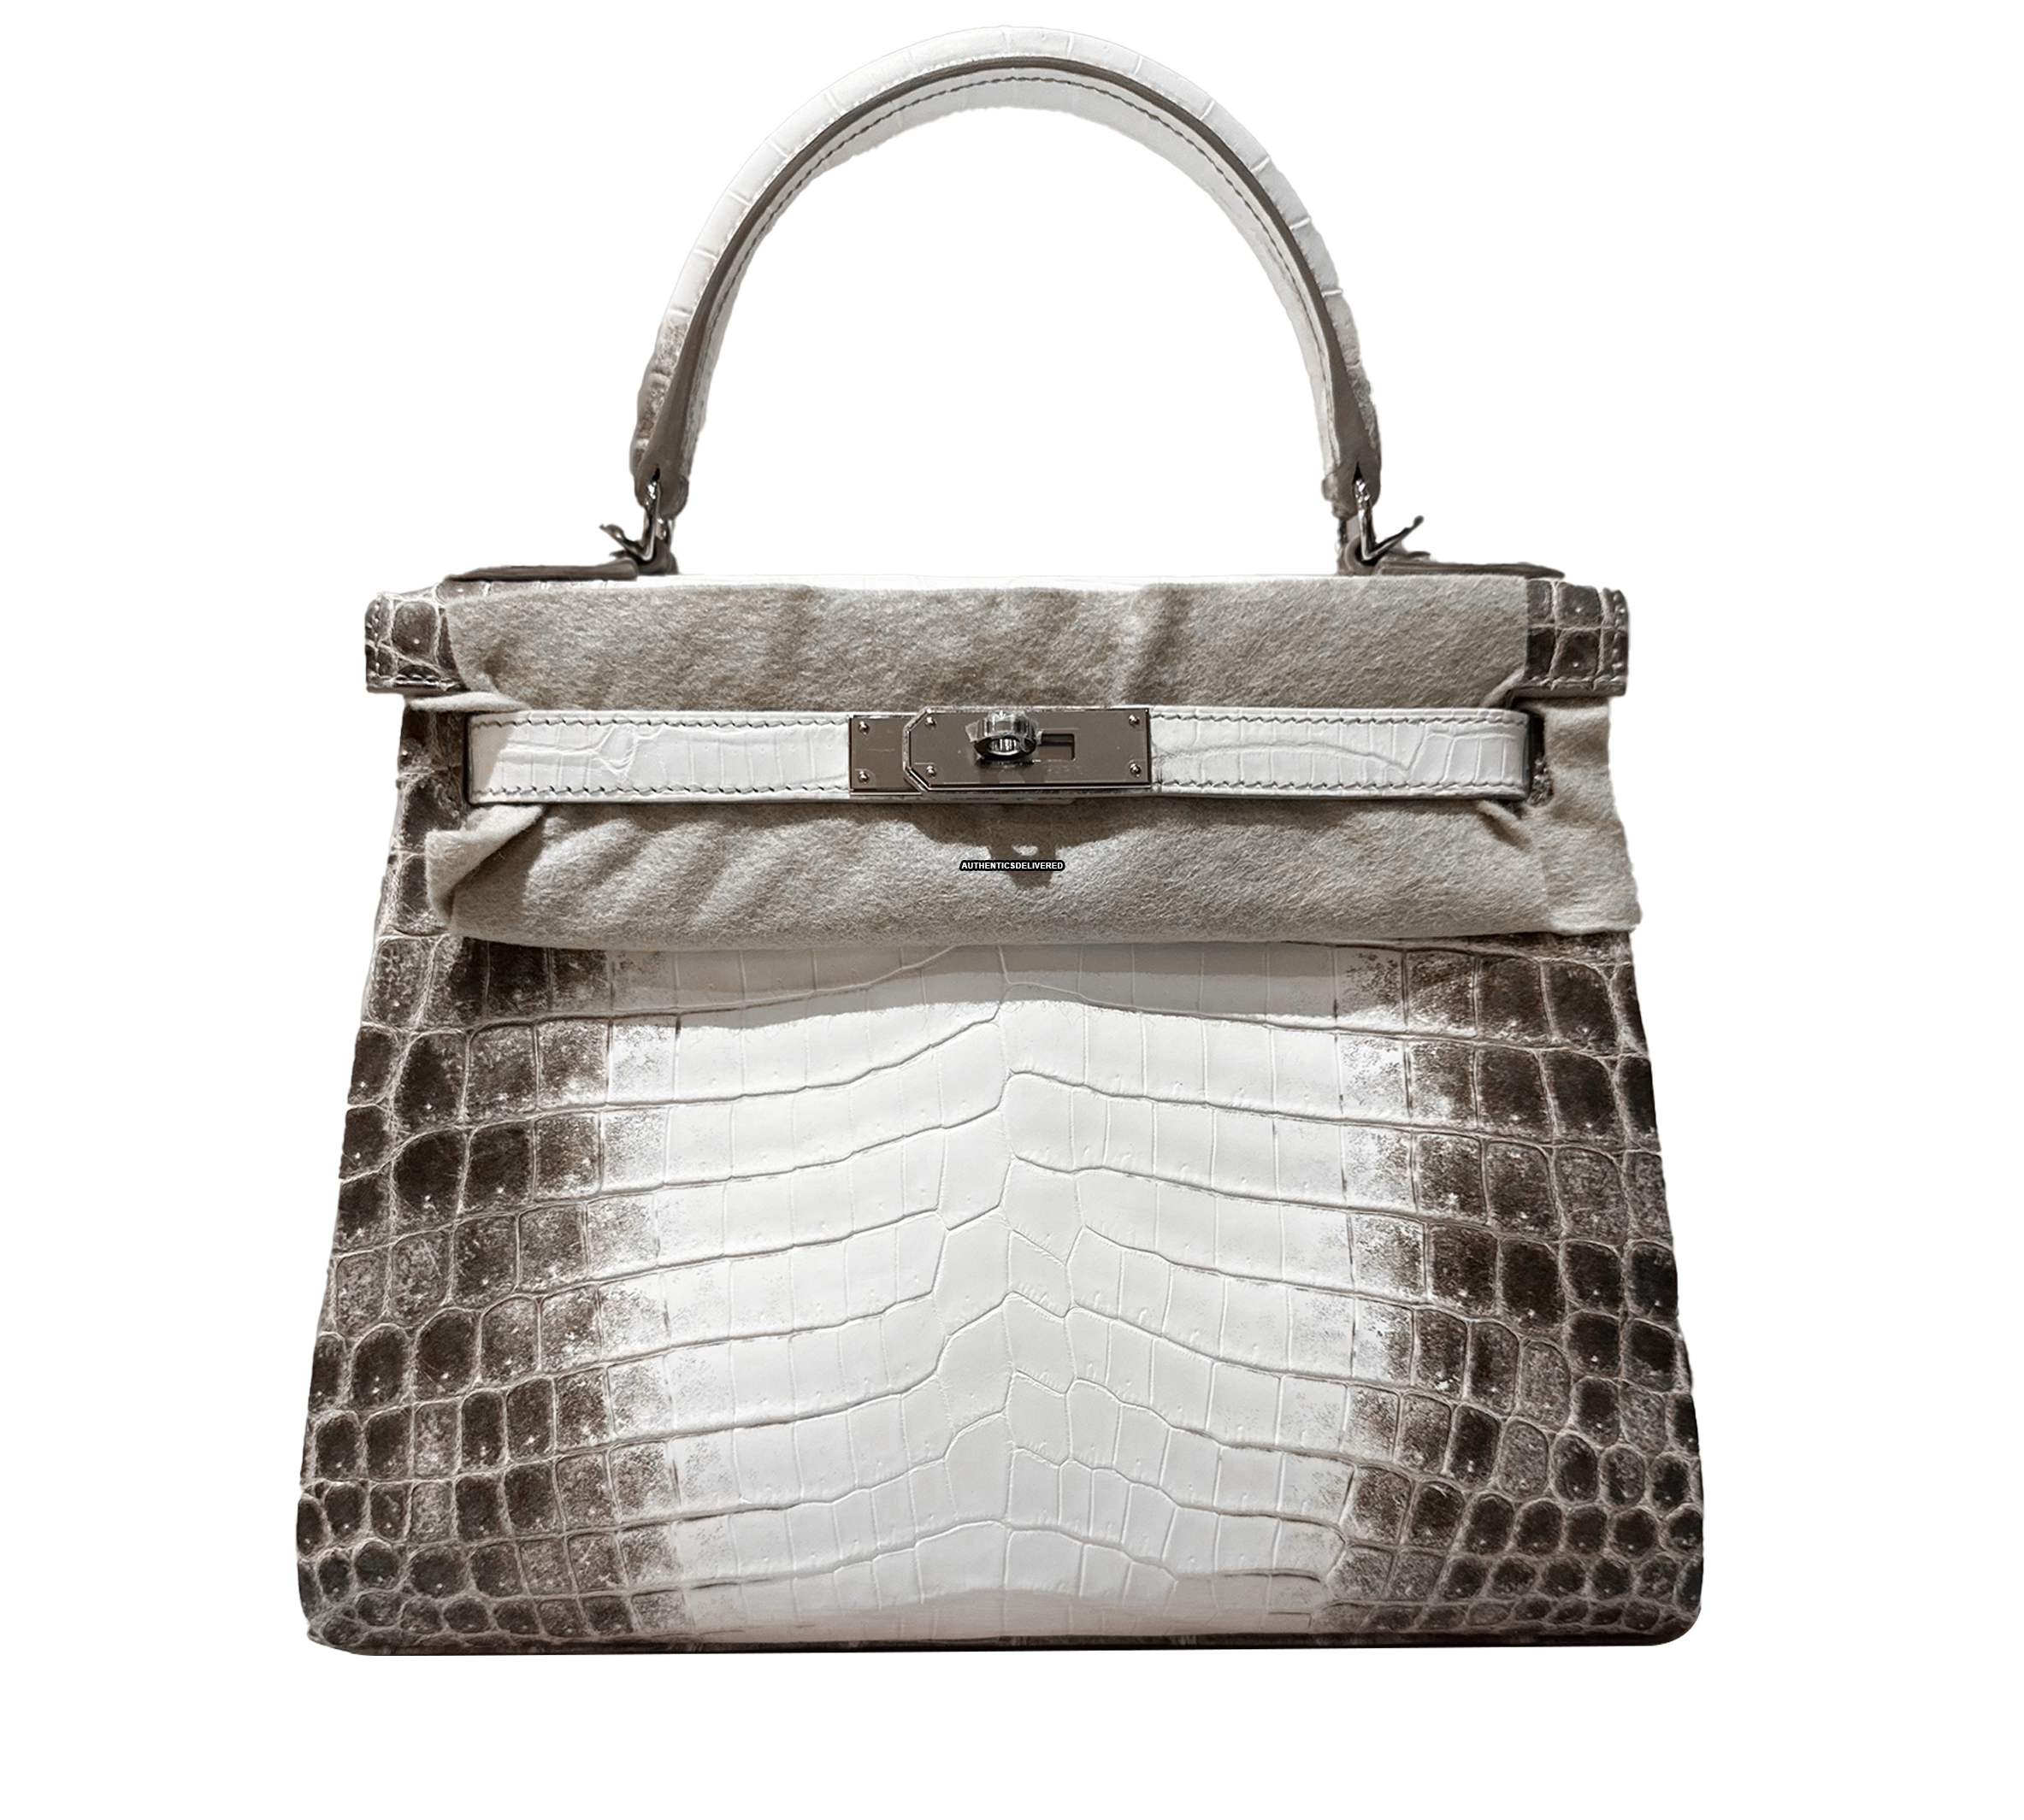 Meet the Hermès Himalaya Diamond Kelly in size 28. Which handbag